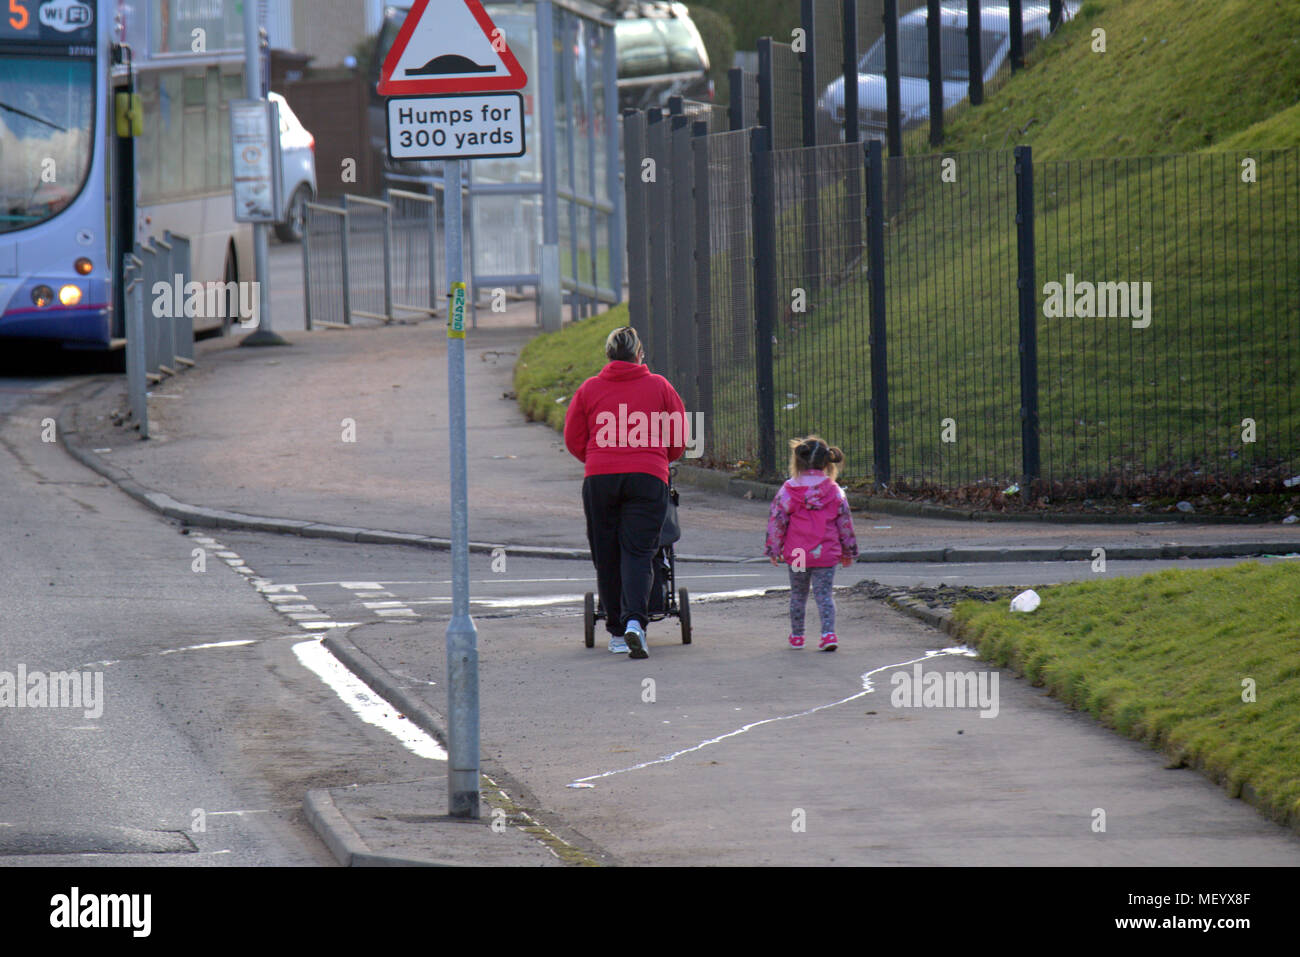 local people single woman mother pushing pram  on street pavement sidewalk  road bus small child Castlemilk, Glasgow, UK Stock Photo